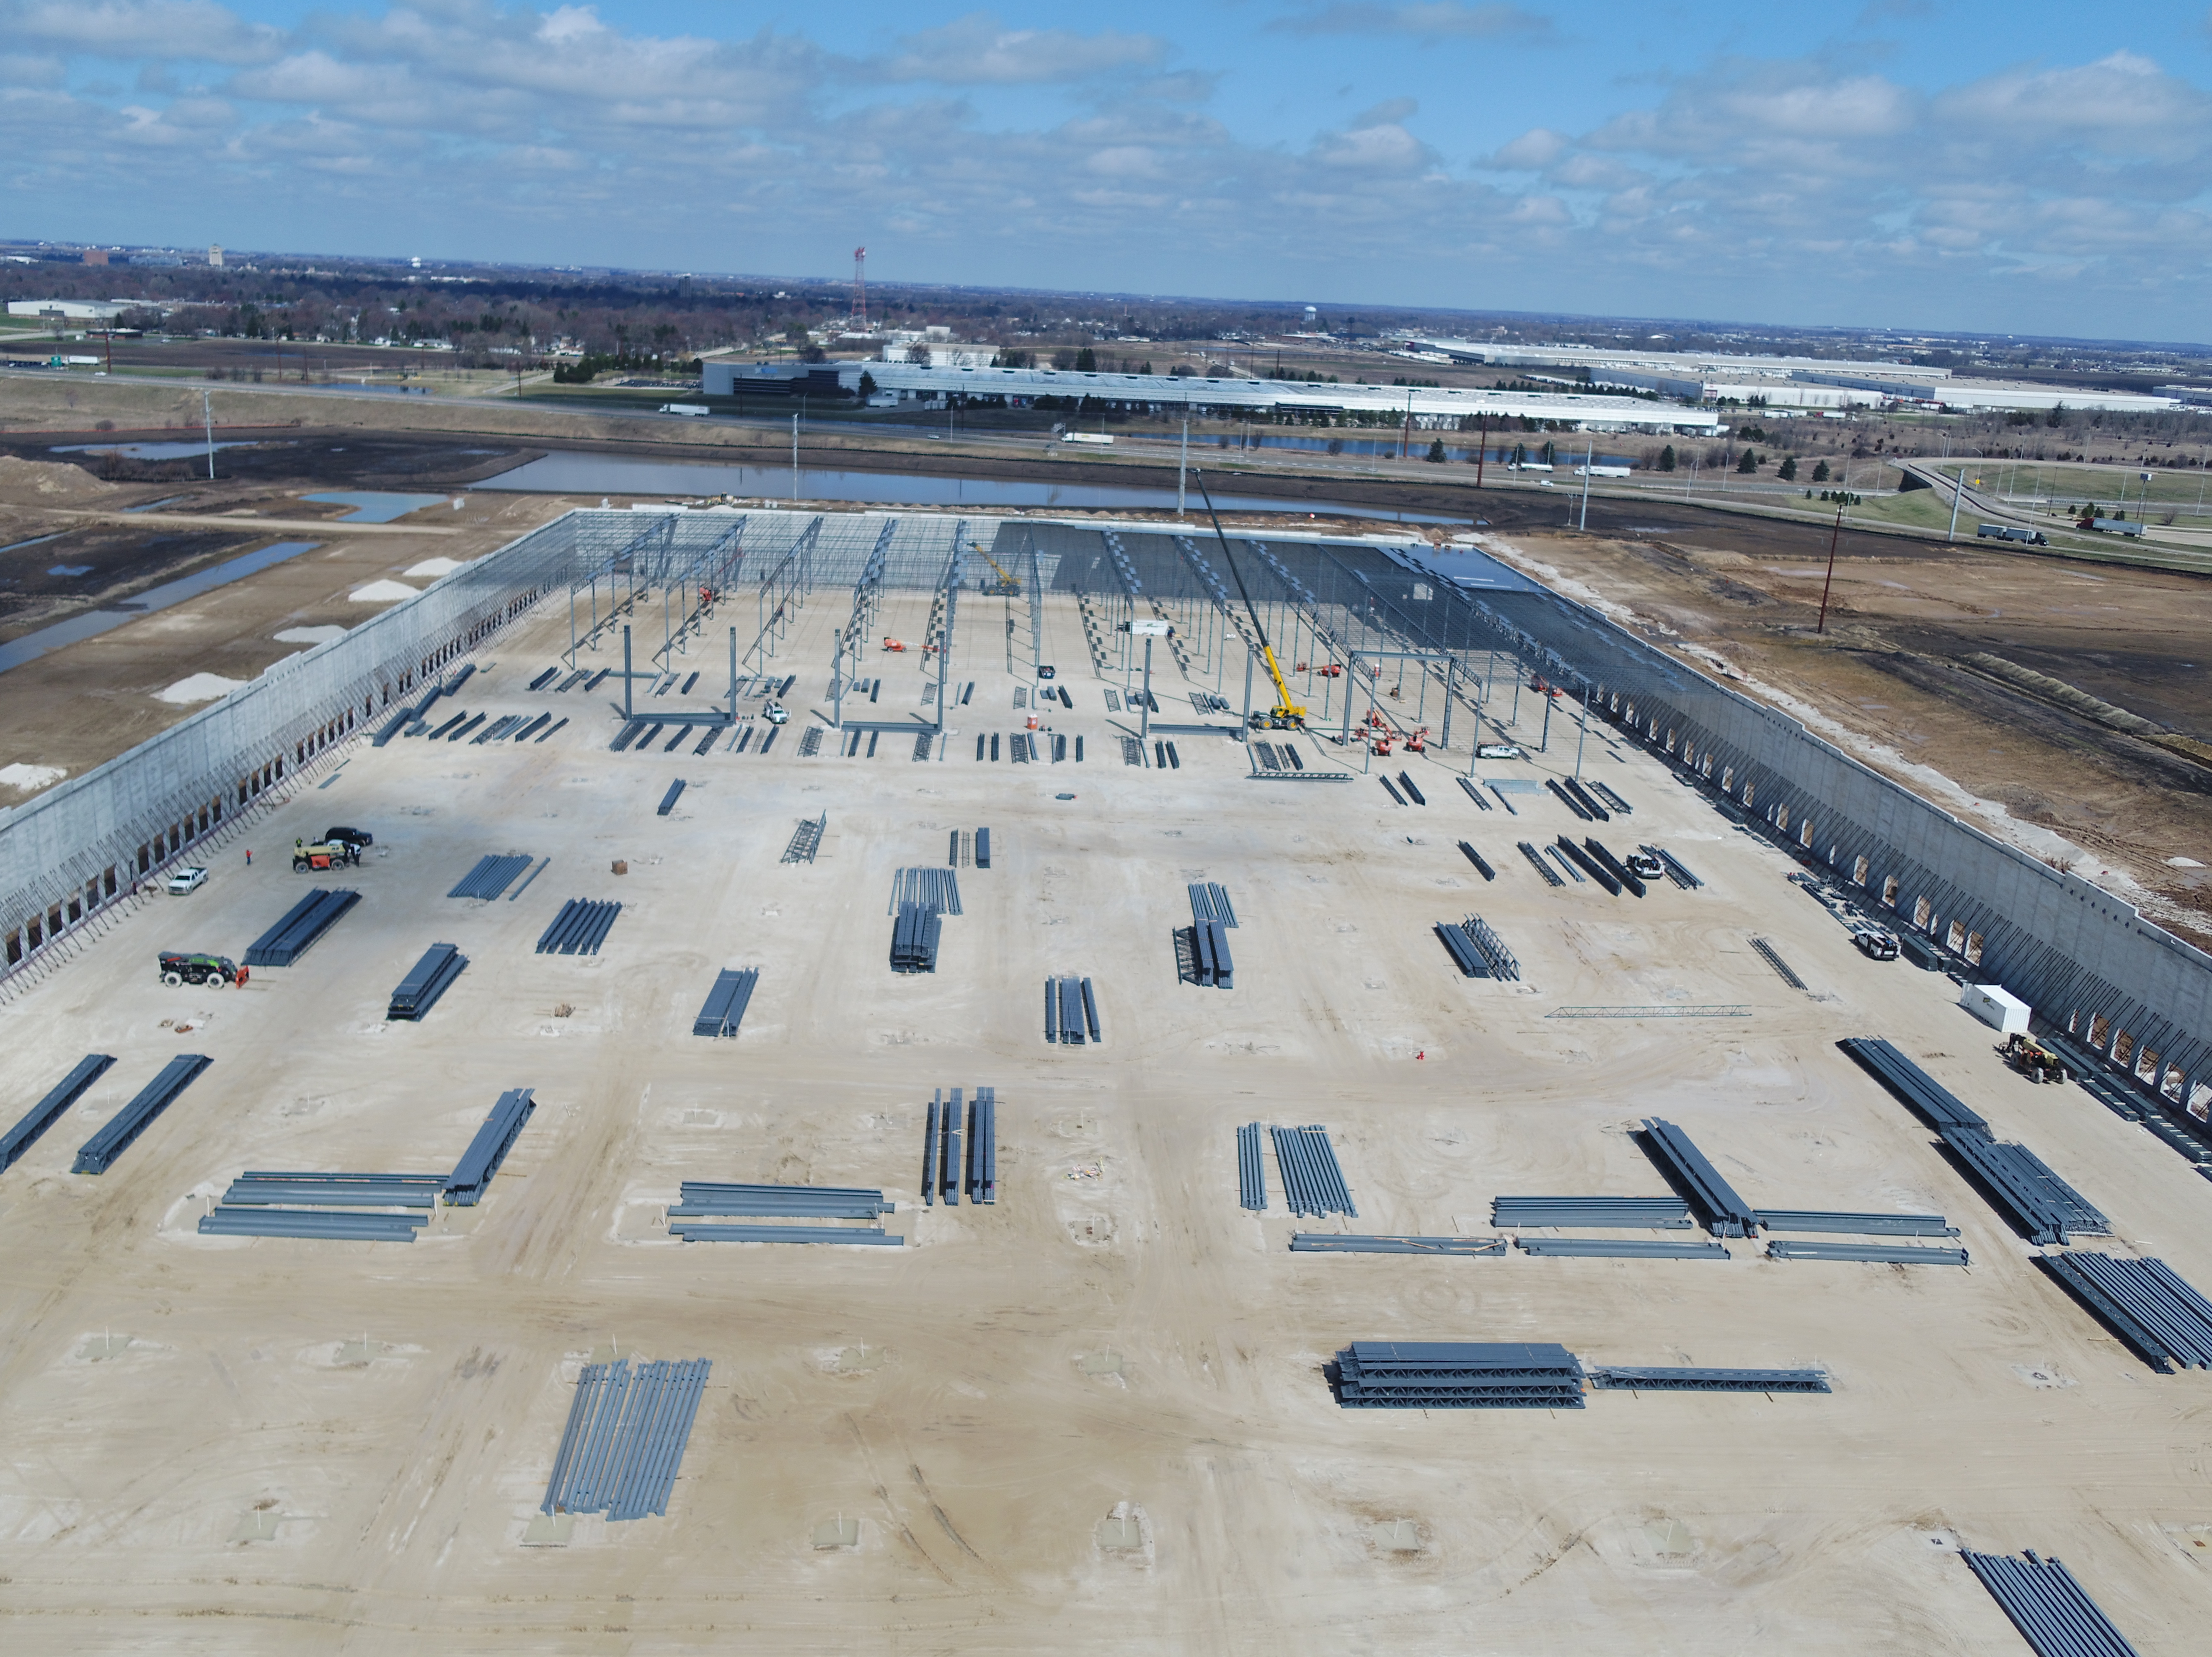 1.2M SF warehouse in DeKalb, Illinois